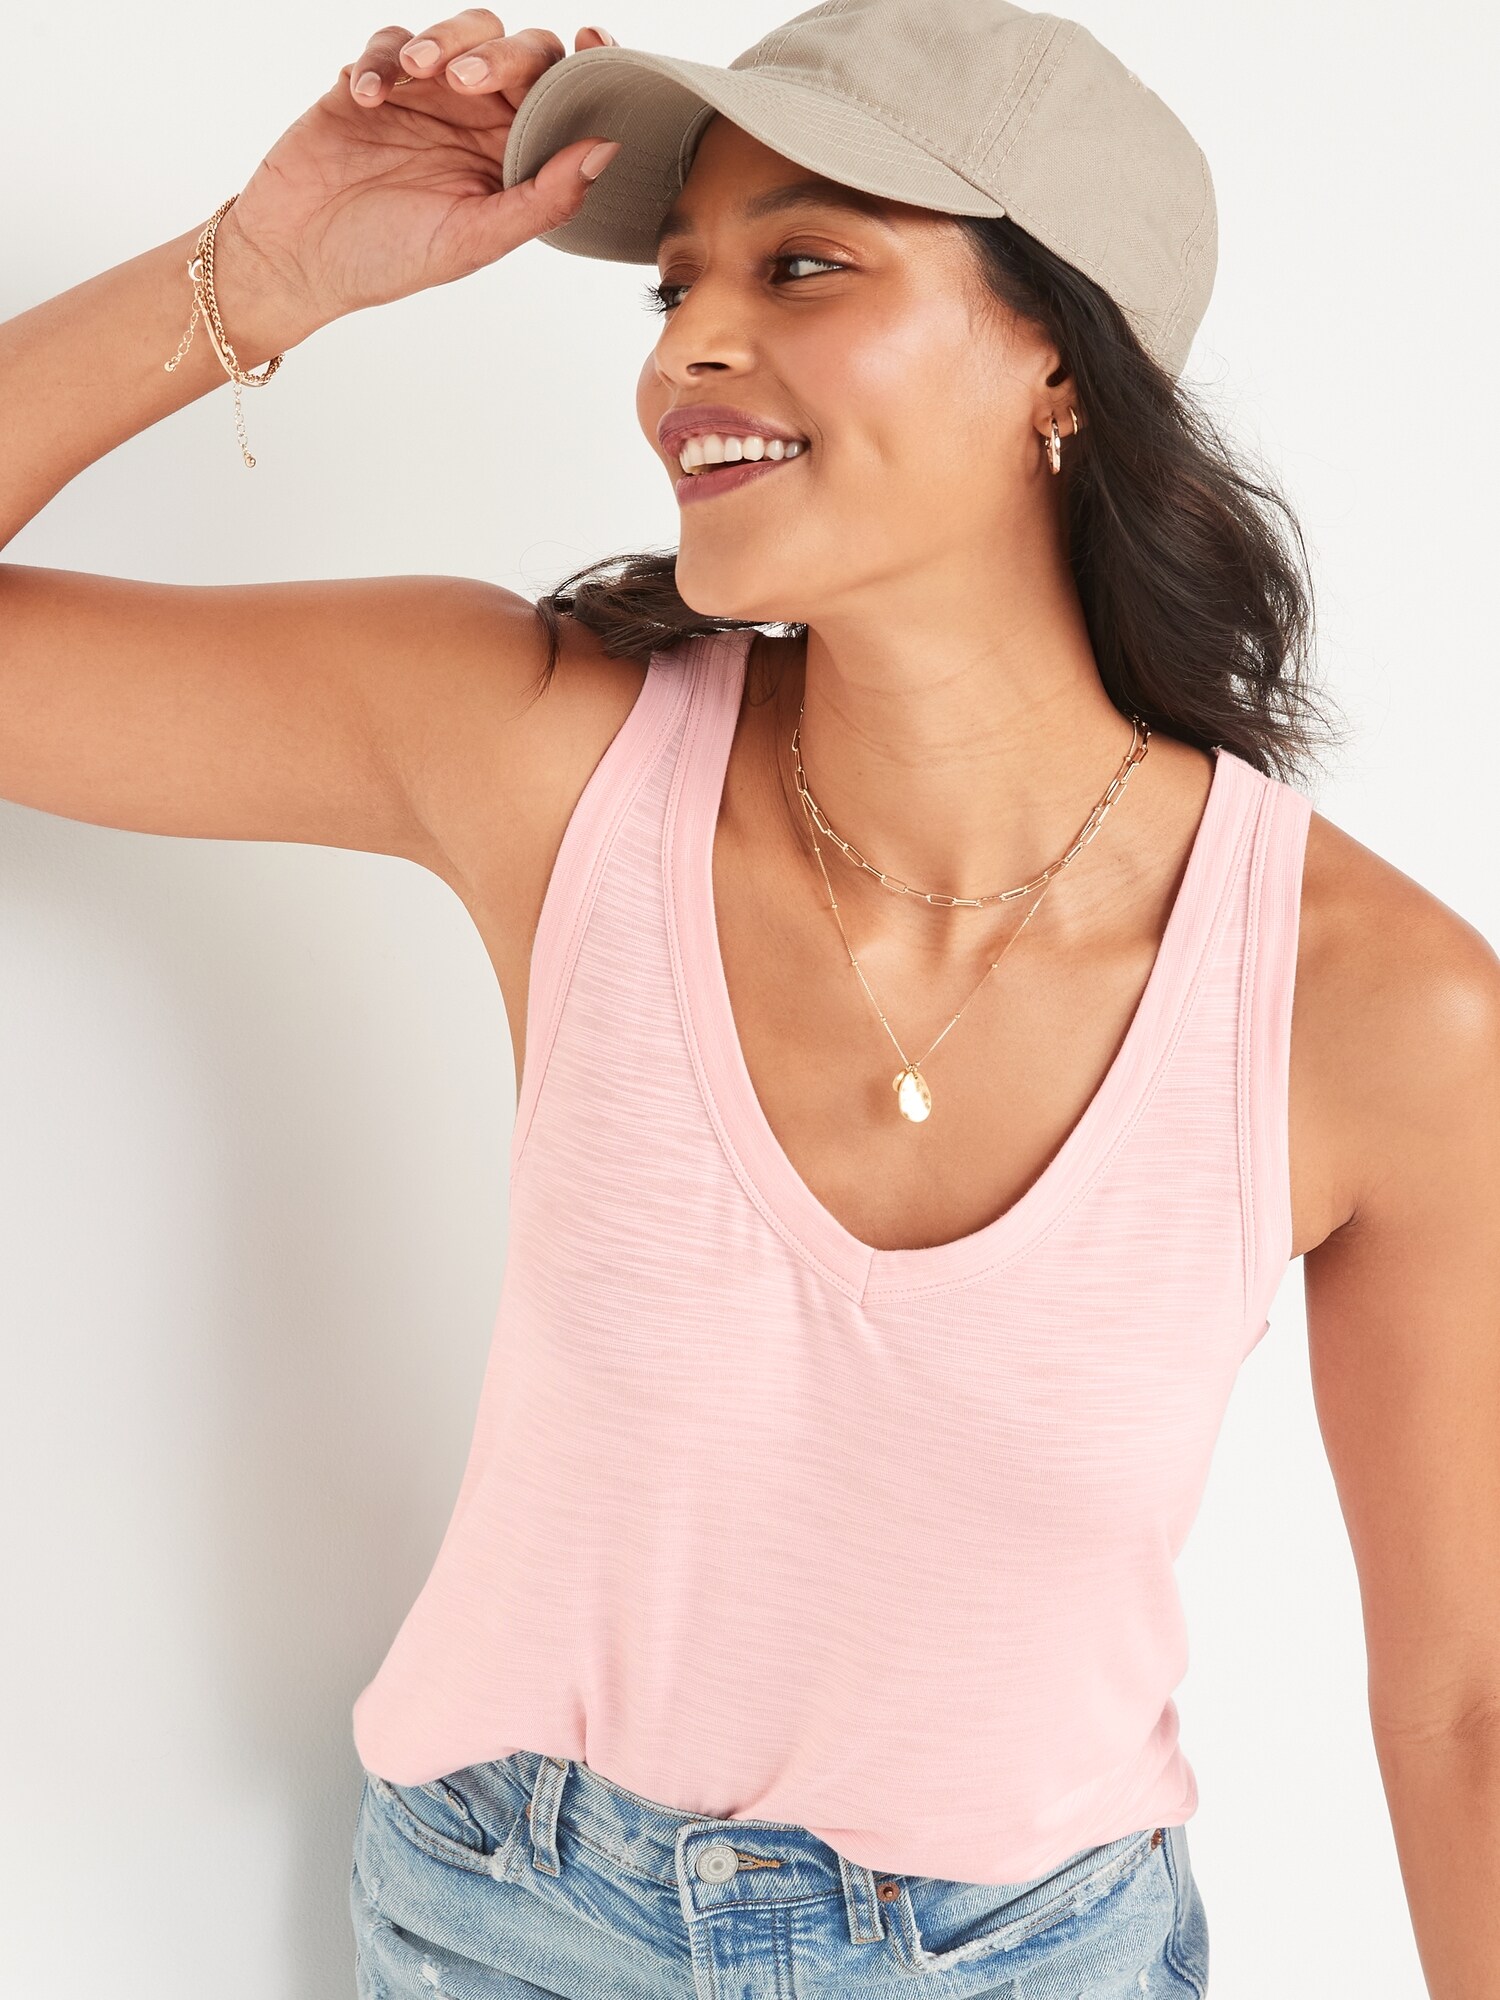 a woman wearing a light pink tank top